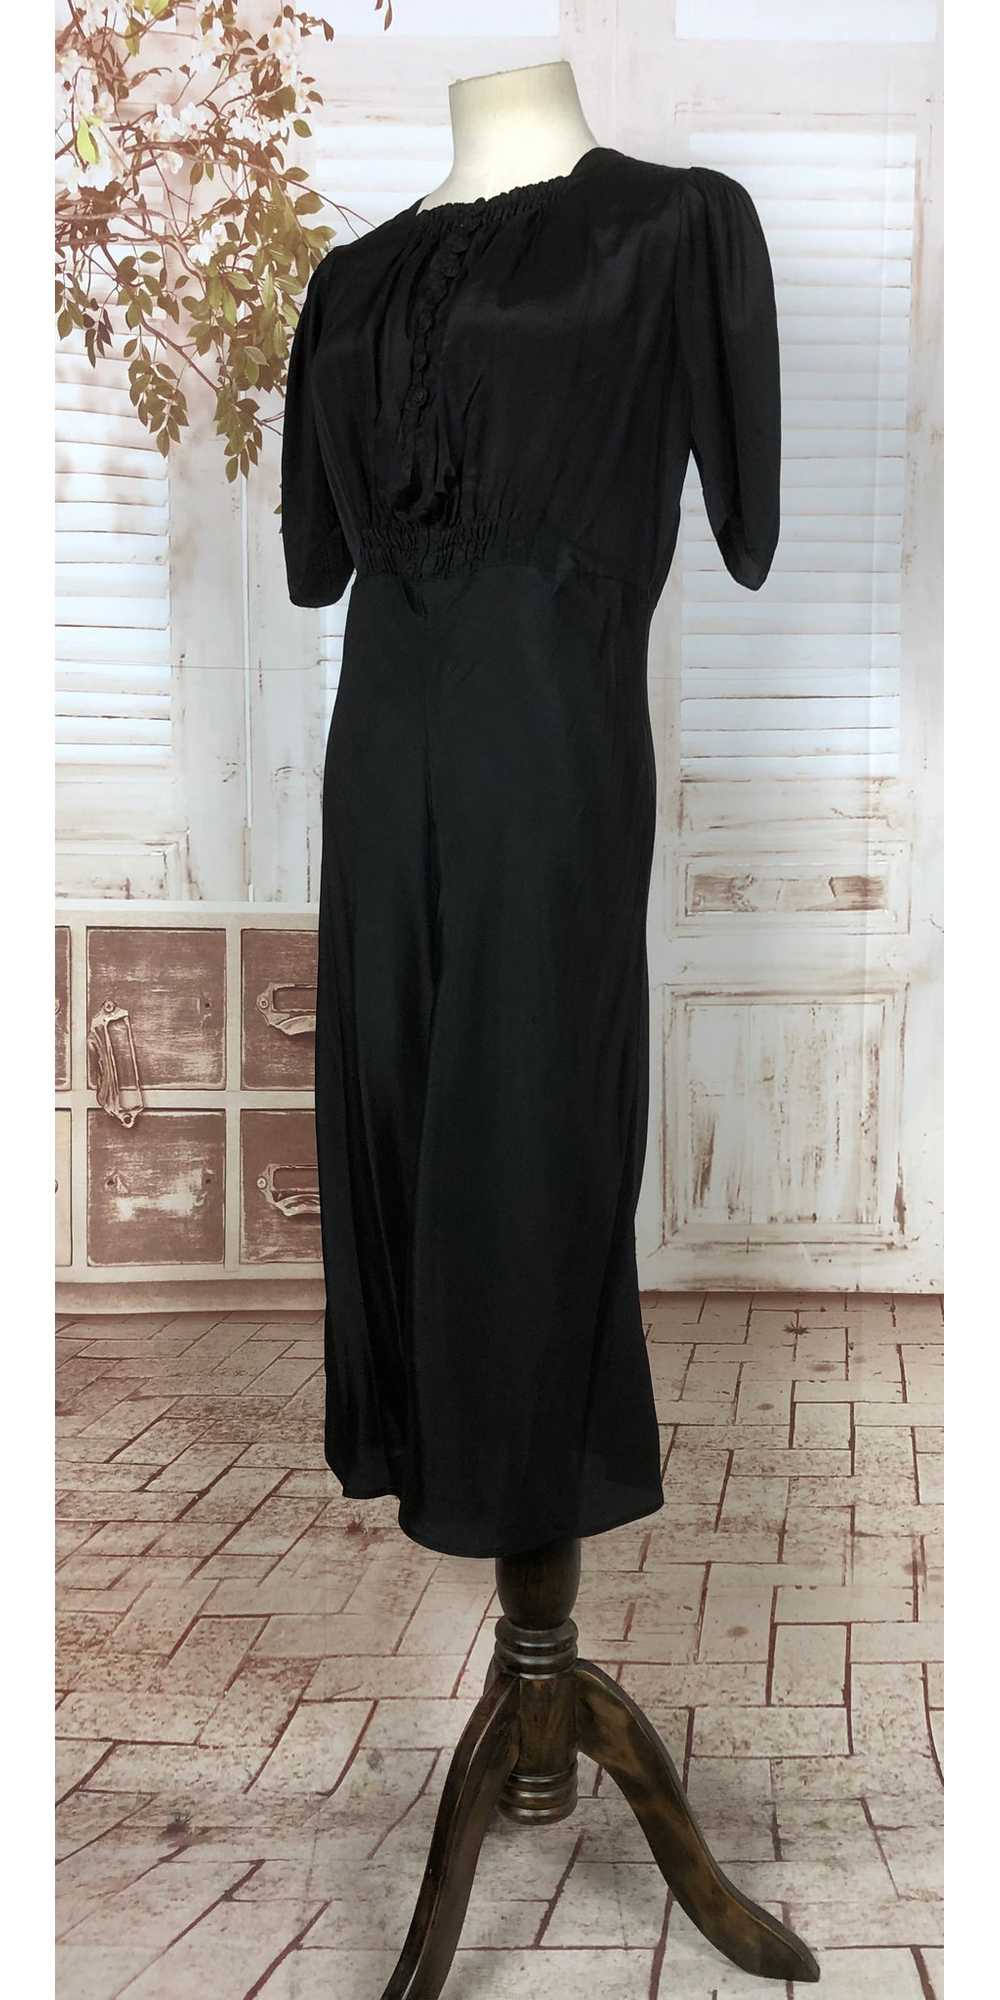 Stunning Original 1930s 30s Black Satin Femme Fat… - image 8